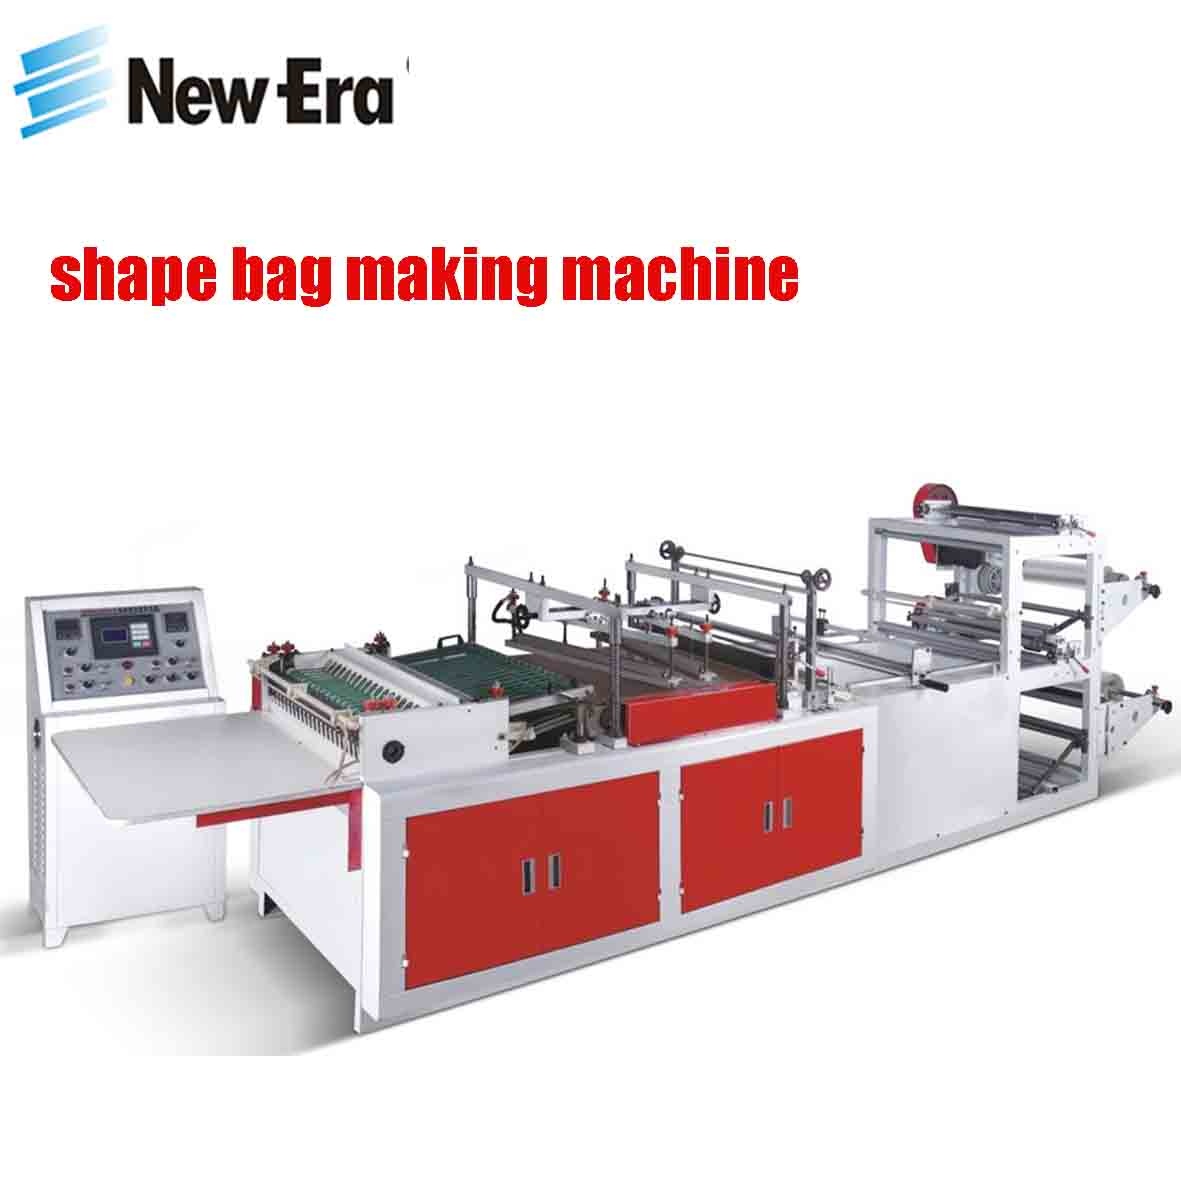 Shape bag making machine